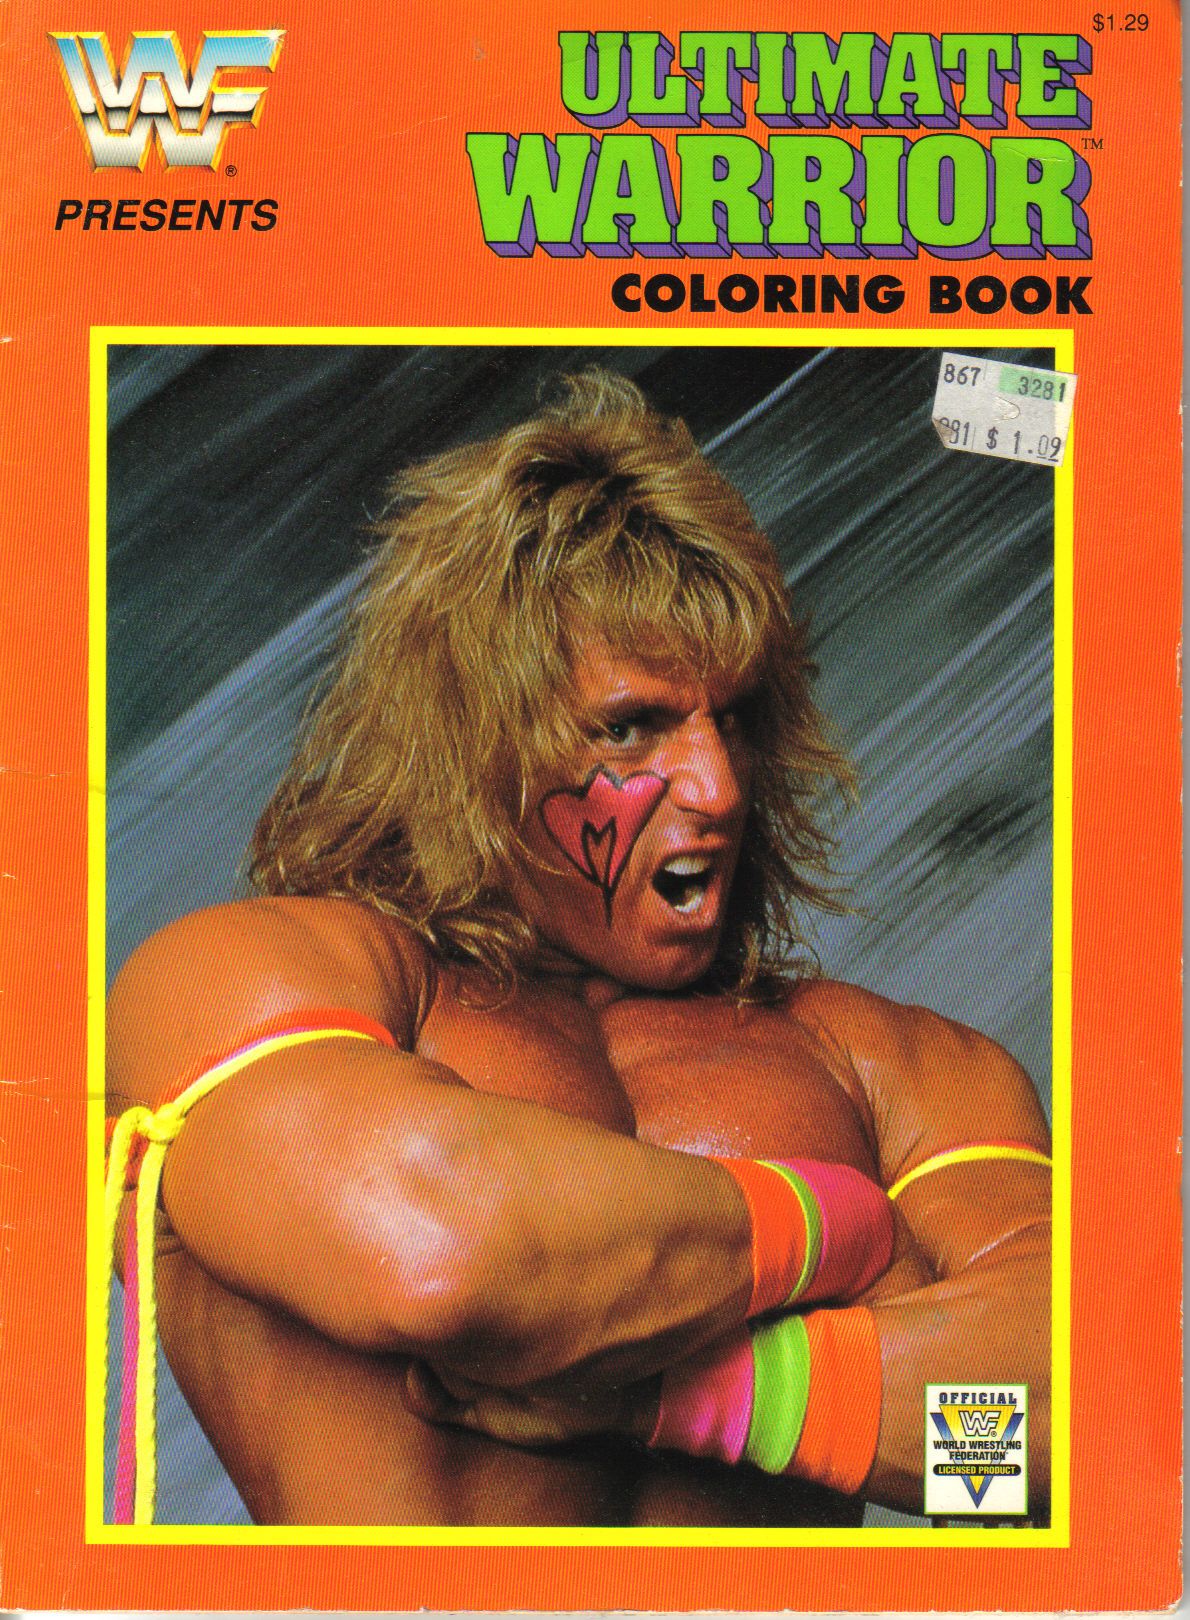 1991 WWF Ultimate warrior Coloring Book